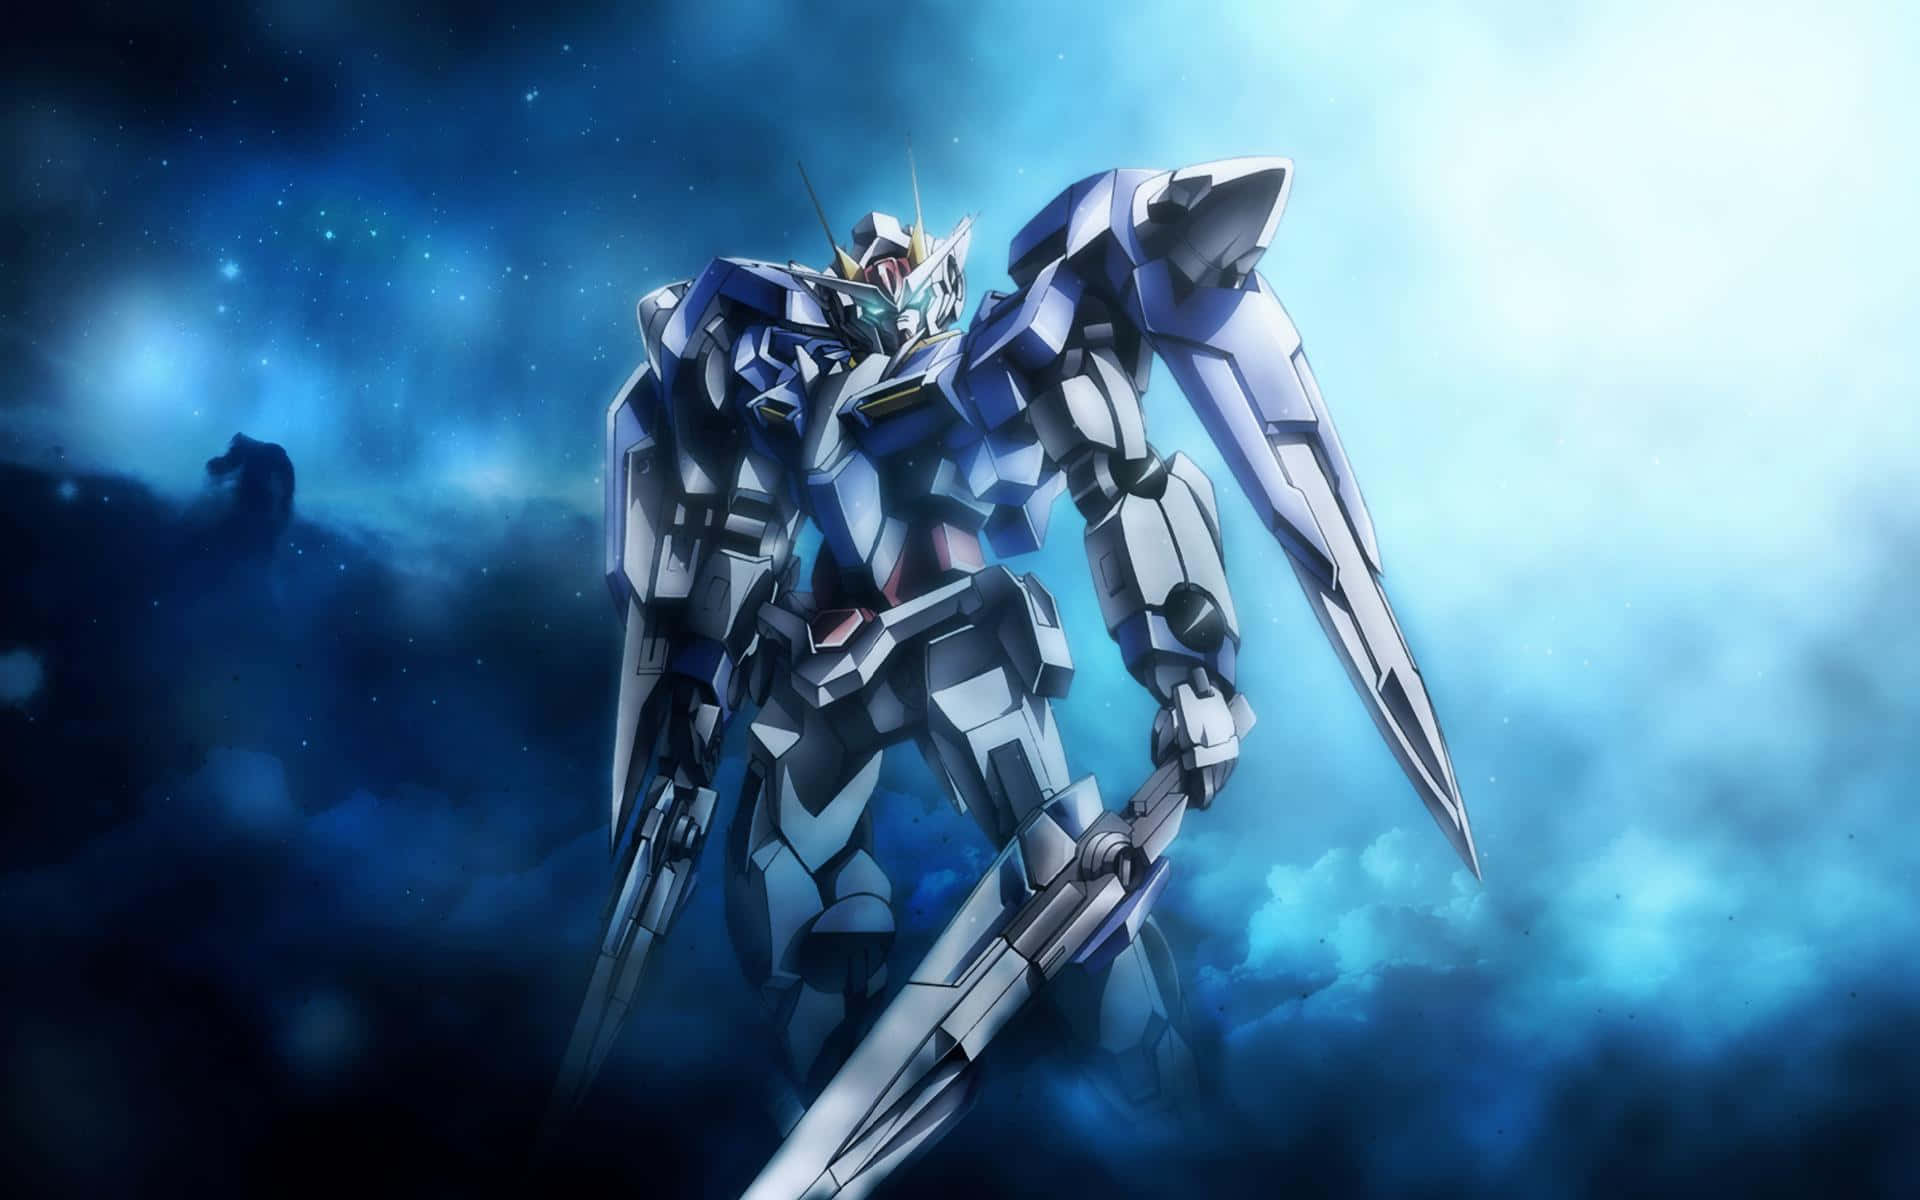 Desktops Reimagined - Perfectly Customized Gundam Desktop Wallpaper